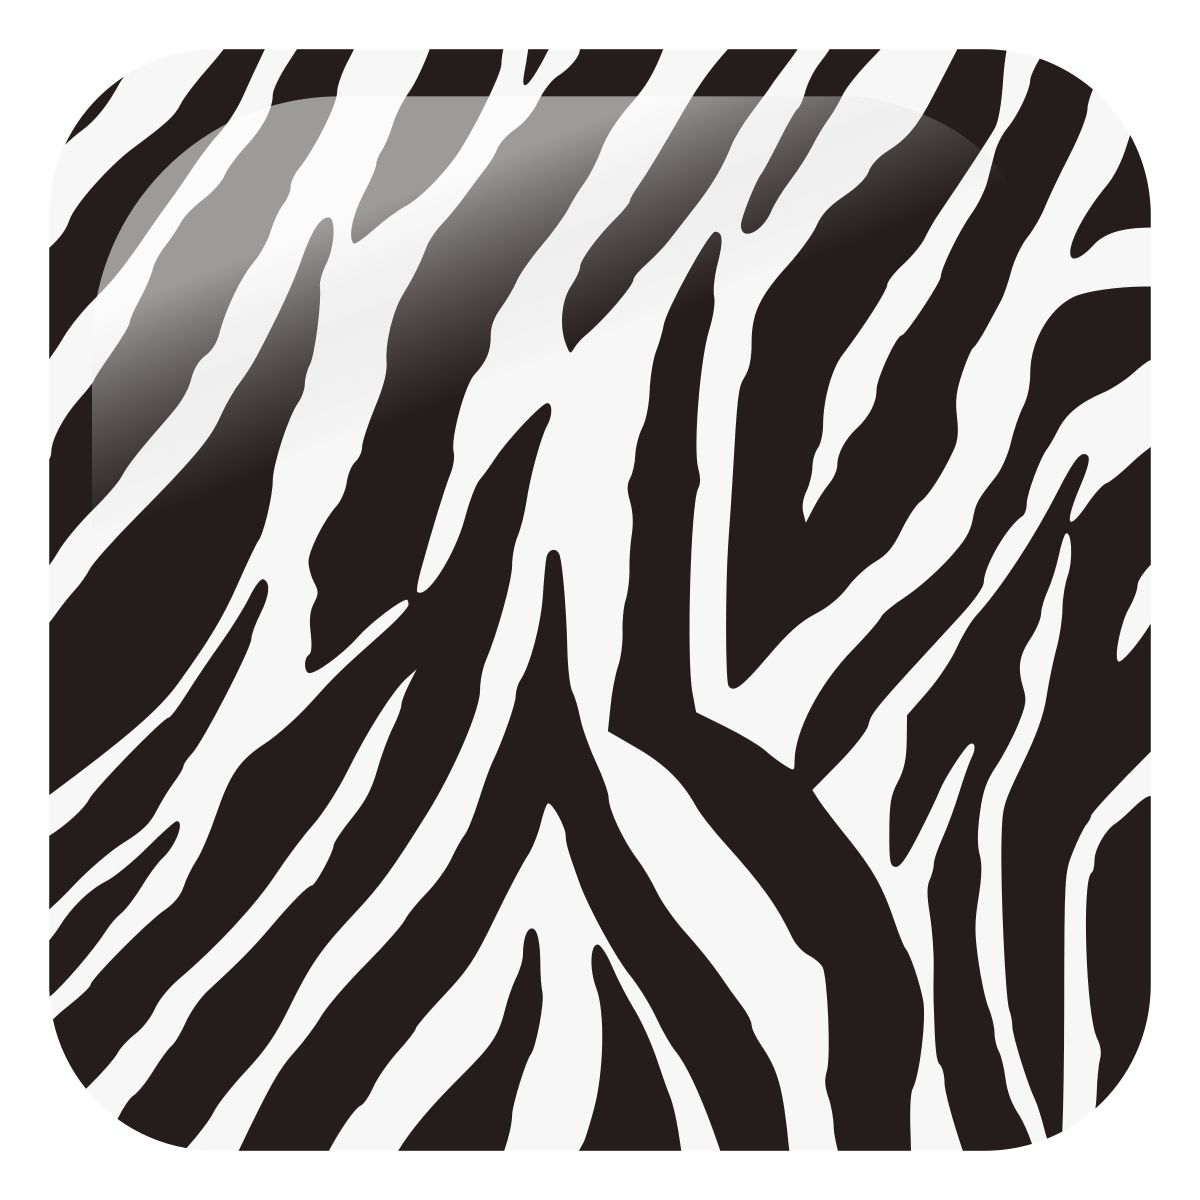 What are zebra stripe pattern?